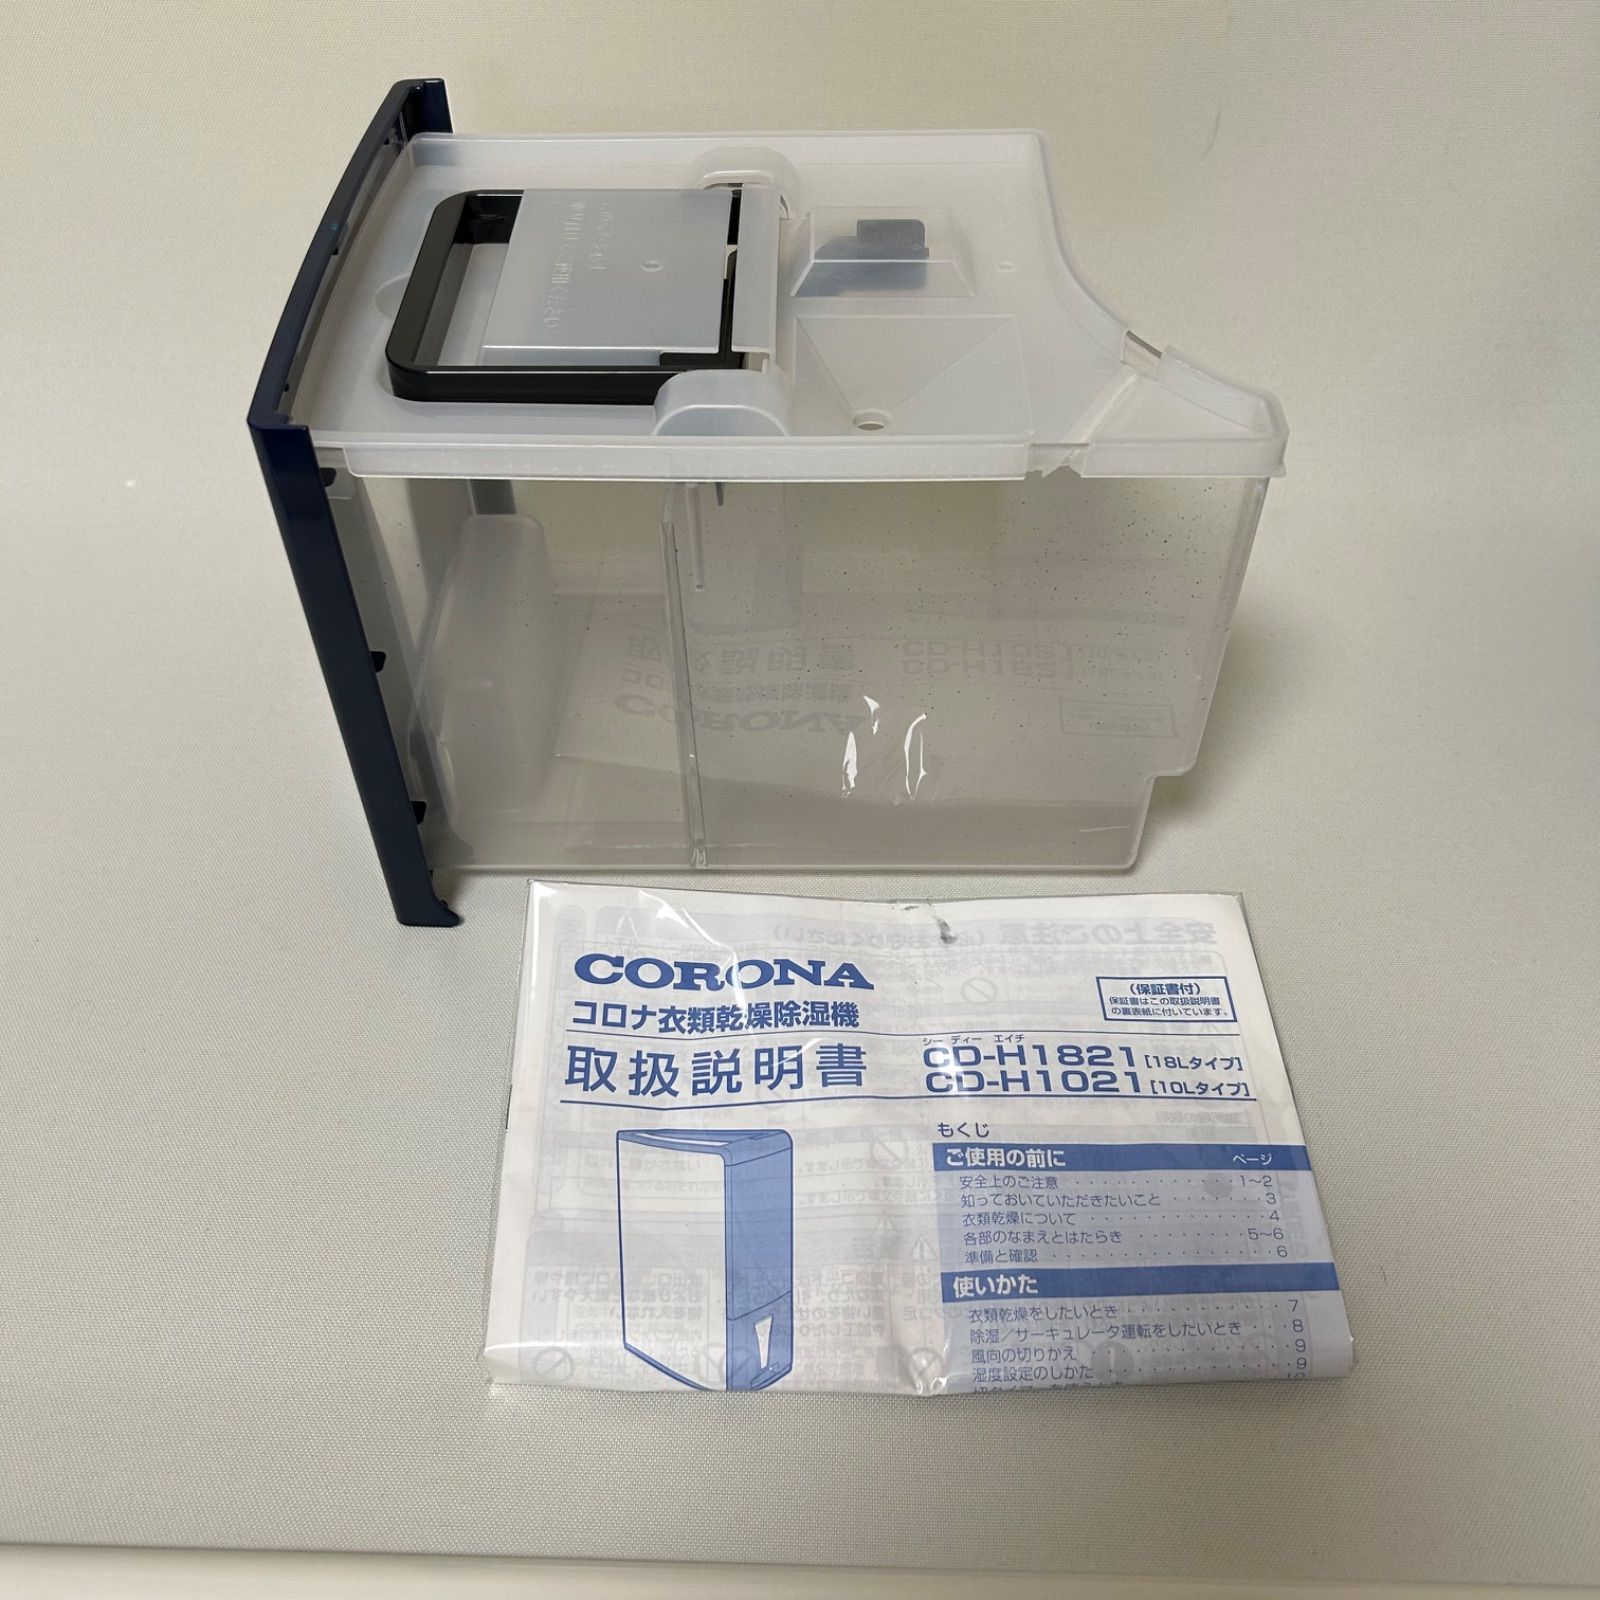 CORONA コロナ 衣類乾燥除湿機 CD-H1821 2021年製 エレガントブルー